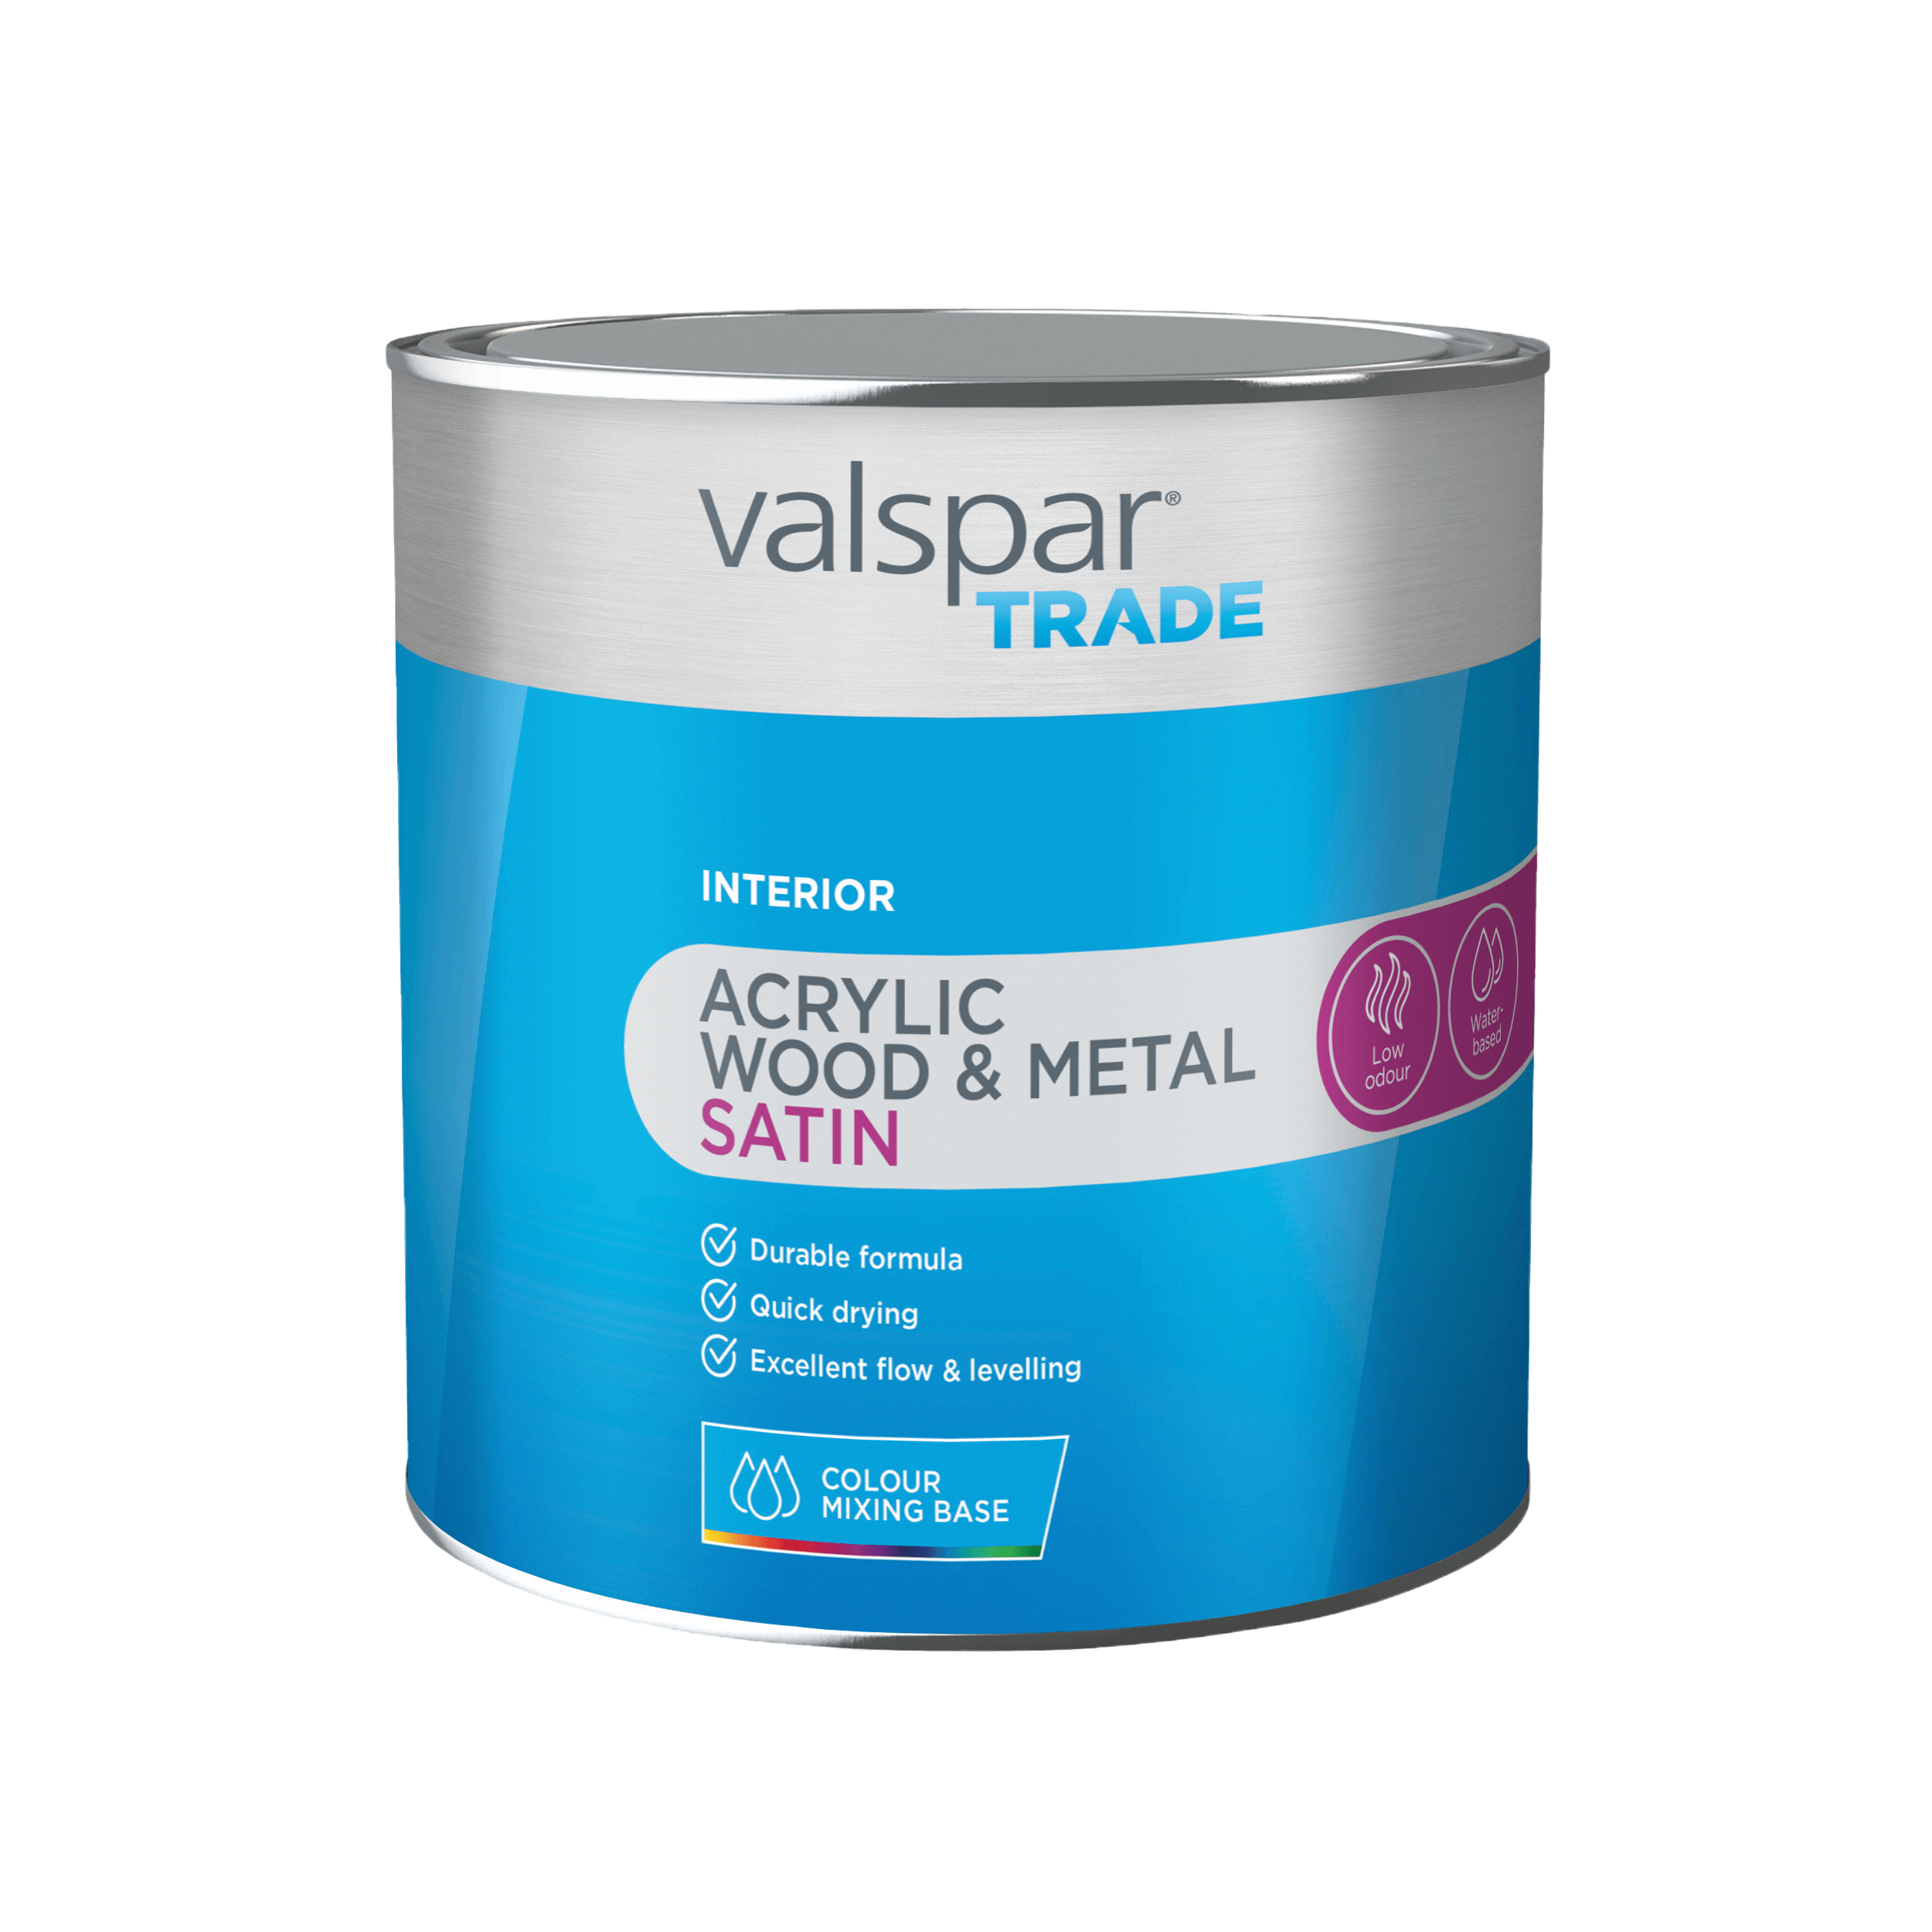 Valspar® Trade Acrylic Wood & Metal